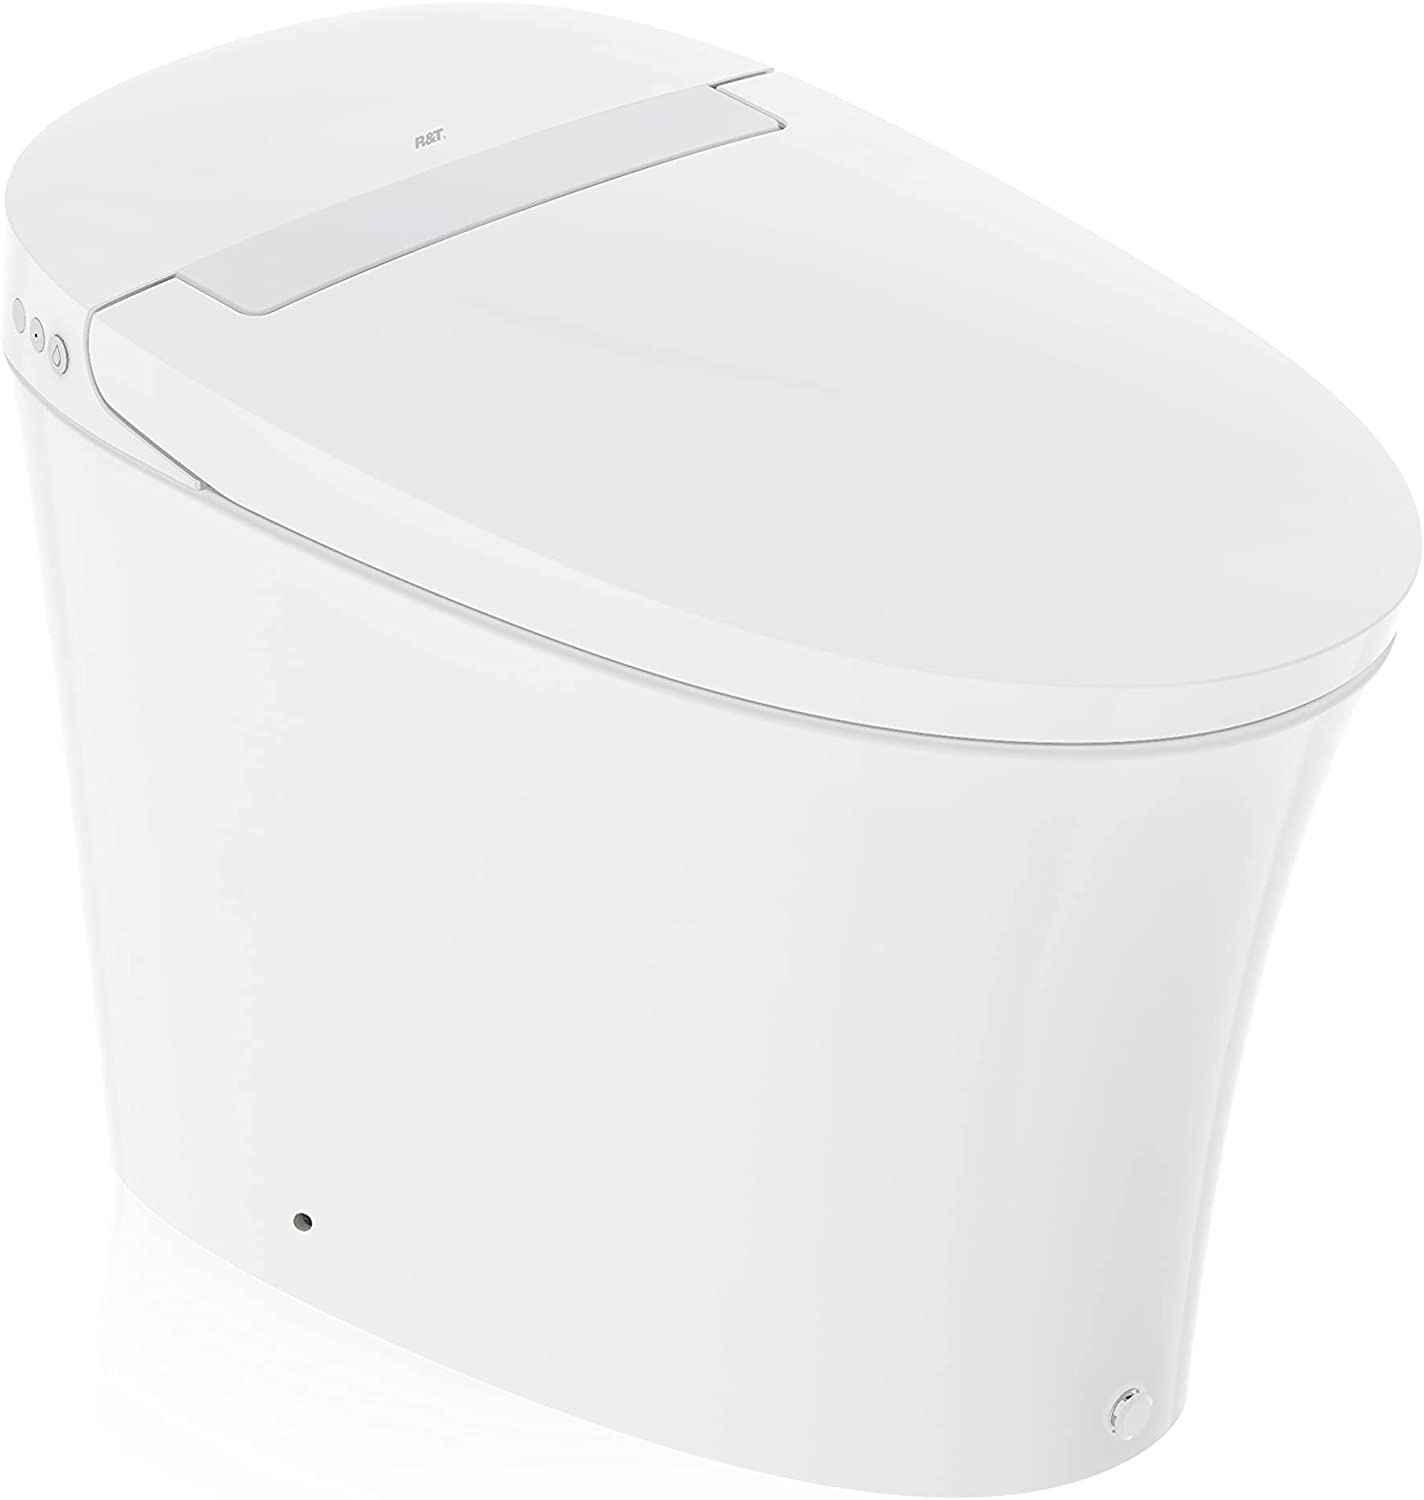 R&T Tankless Smart Toilet